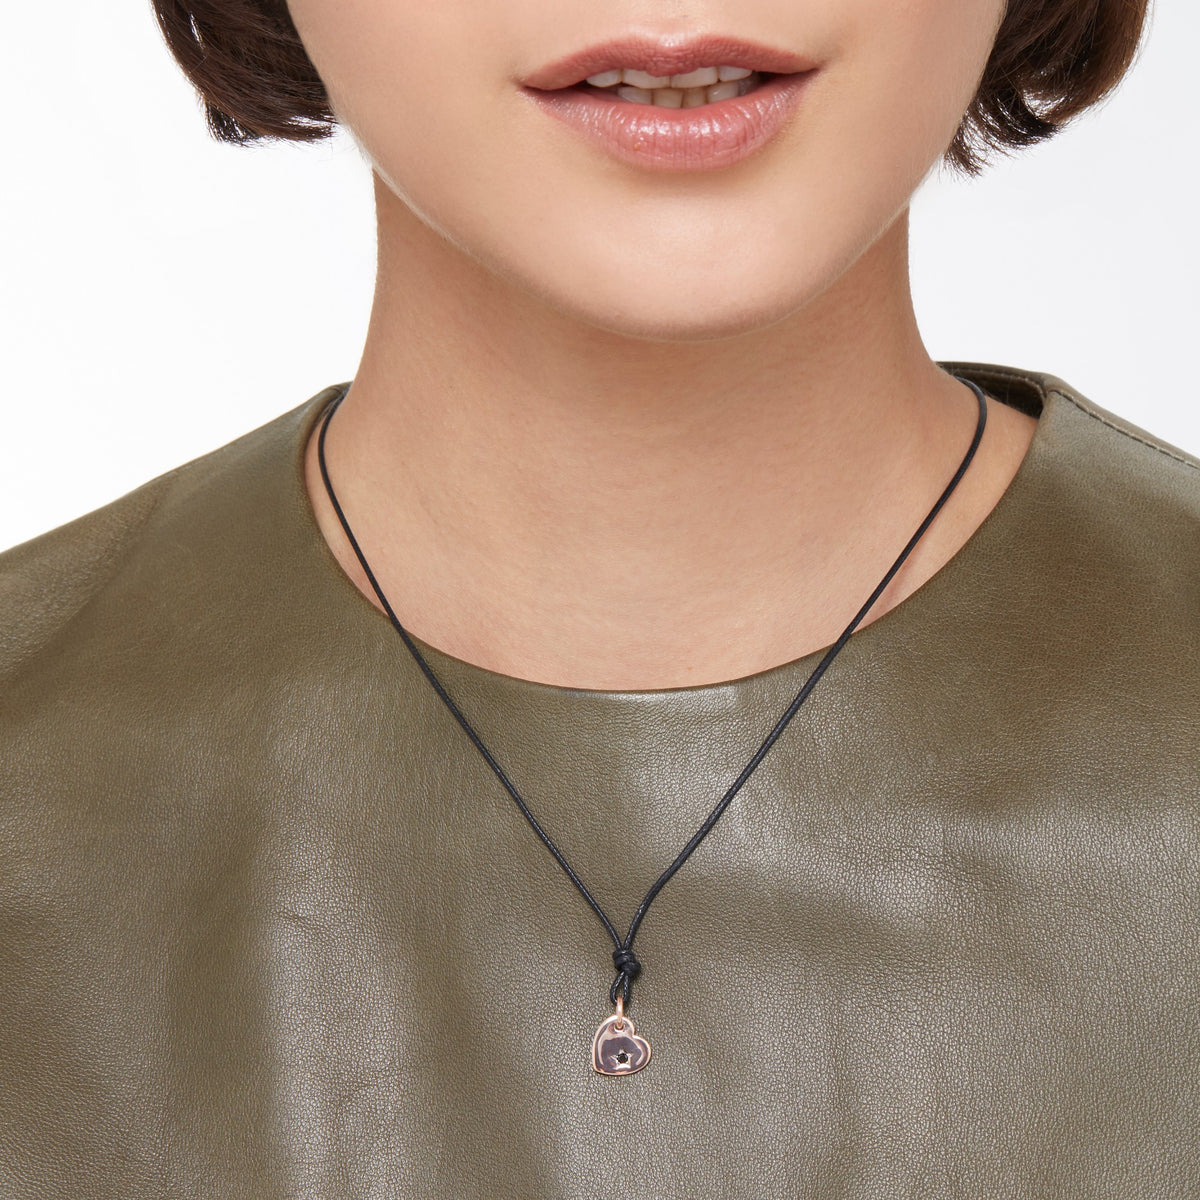 DoDo Charm CUORE (HEART) Black Diamond Rose Gold - Orsini Jewellers